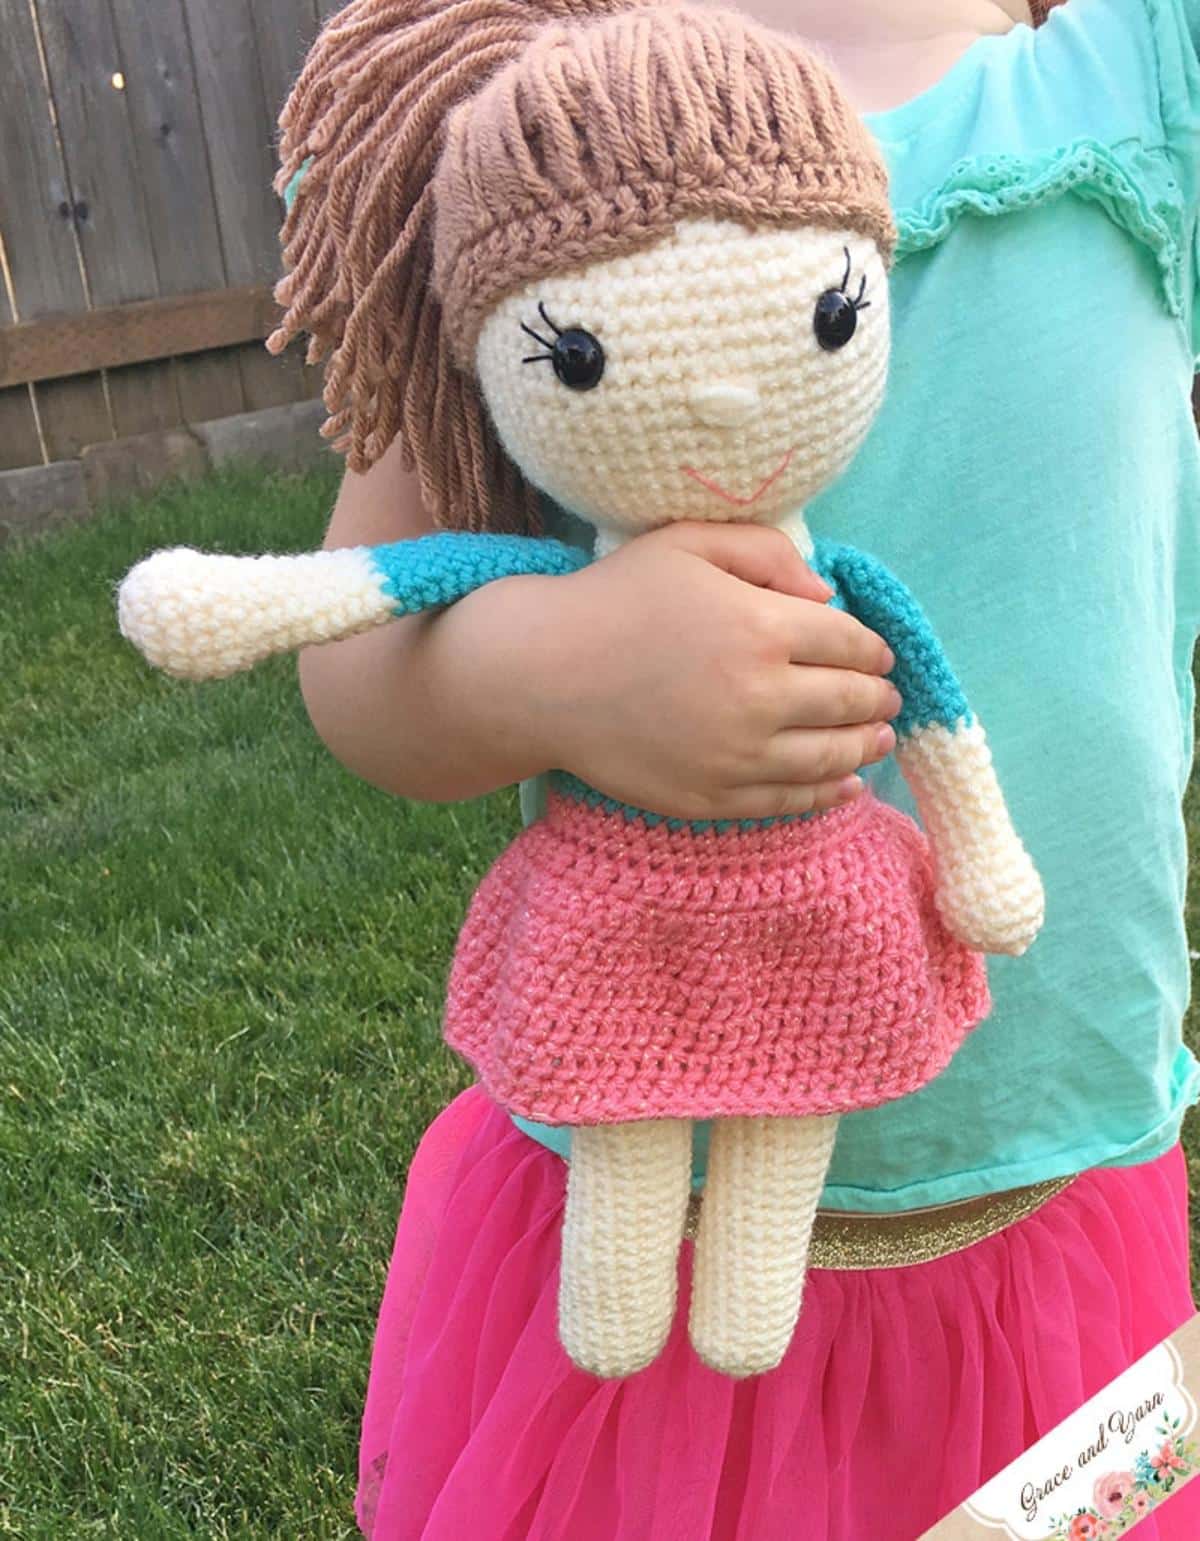 Amy the Amigurumi Doll